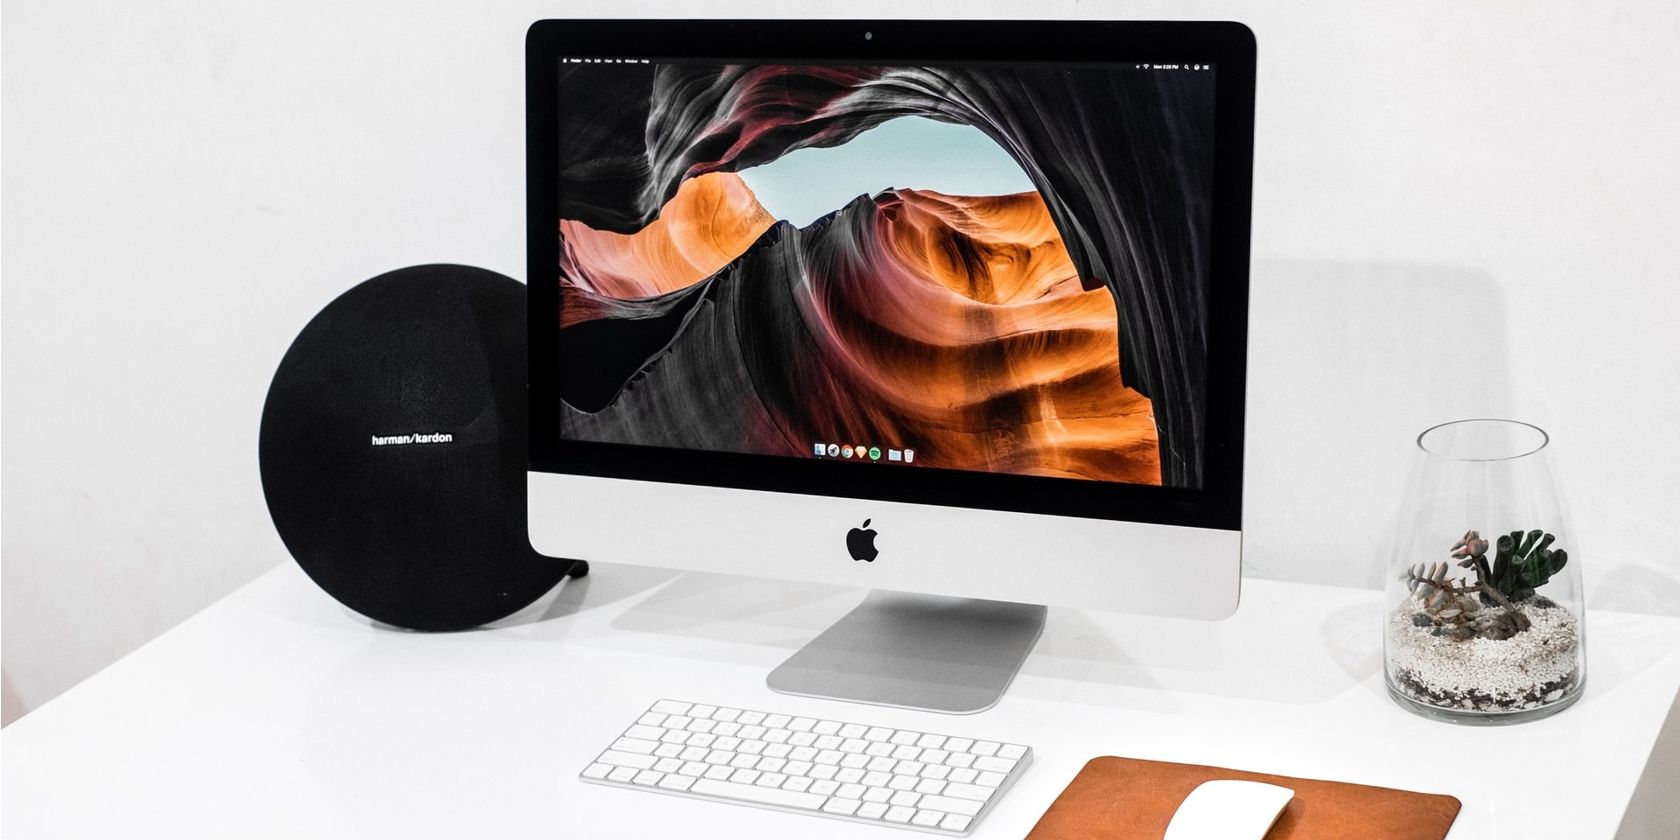 iMac on desk with big round speaker